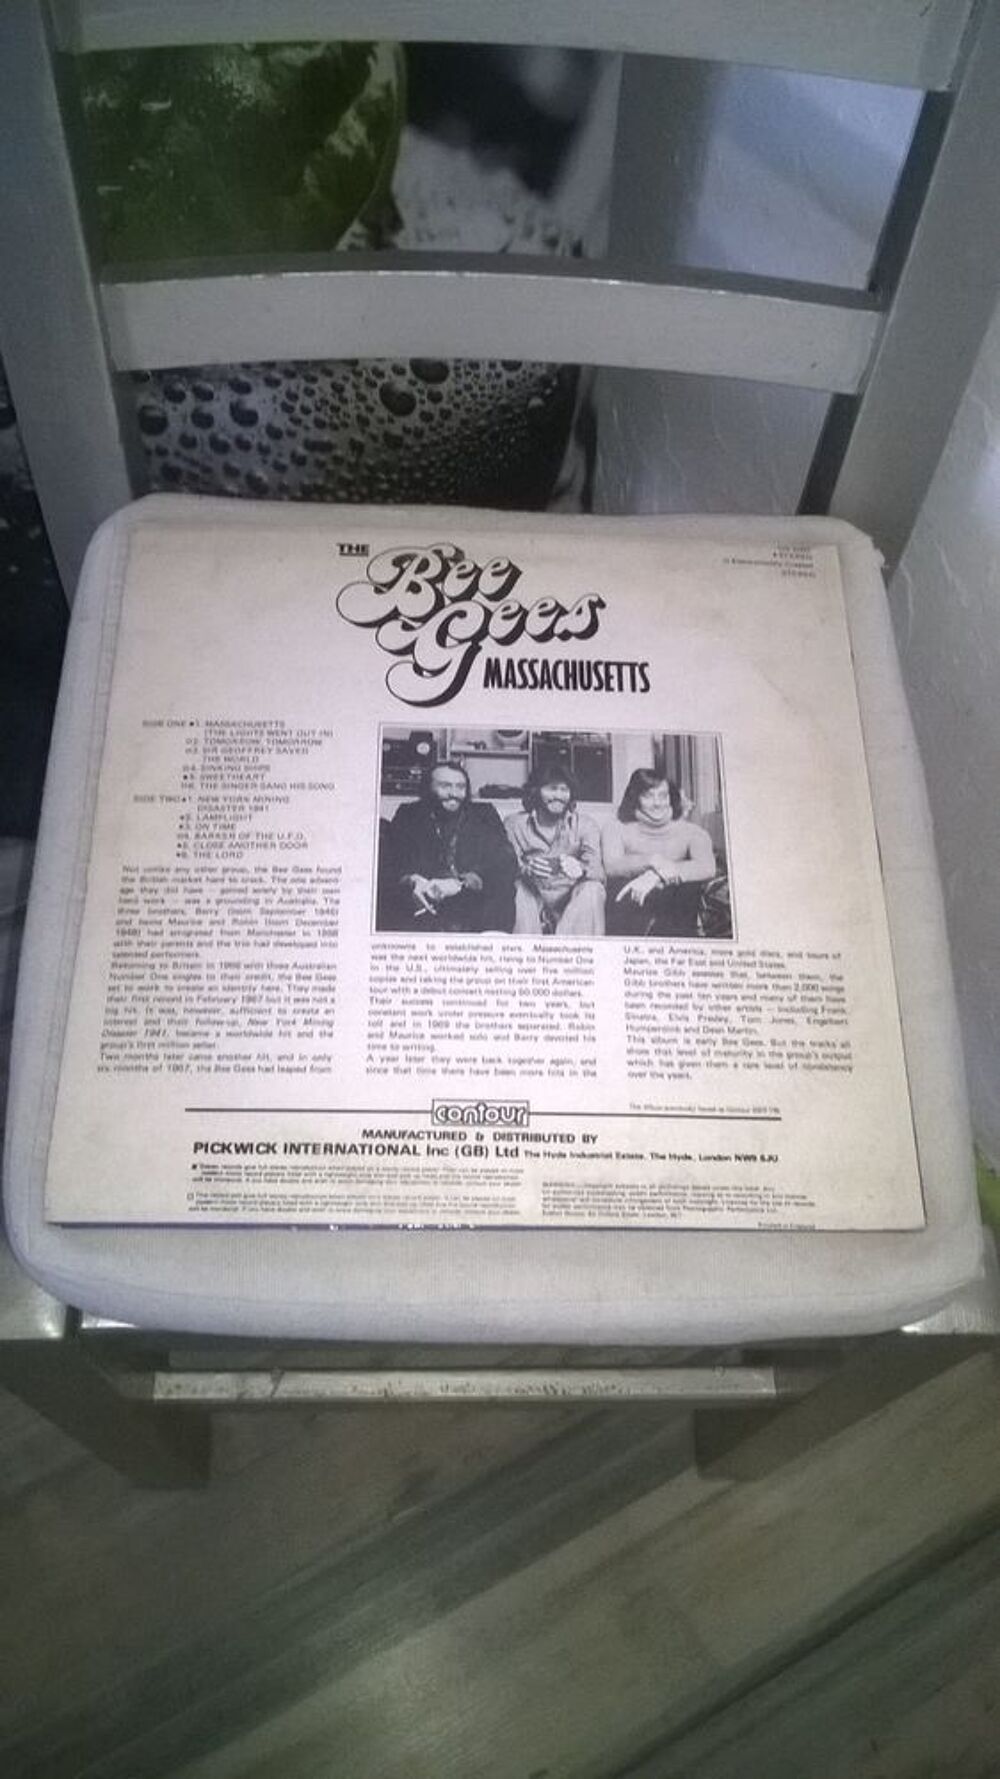 Vinyle Bee Gees
Massachusetts
1978
Excellent etat
Massac CD et vinyles